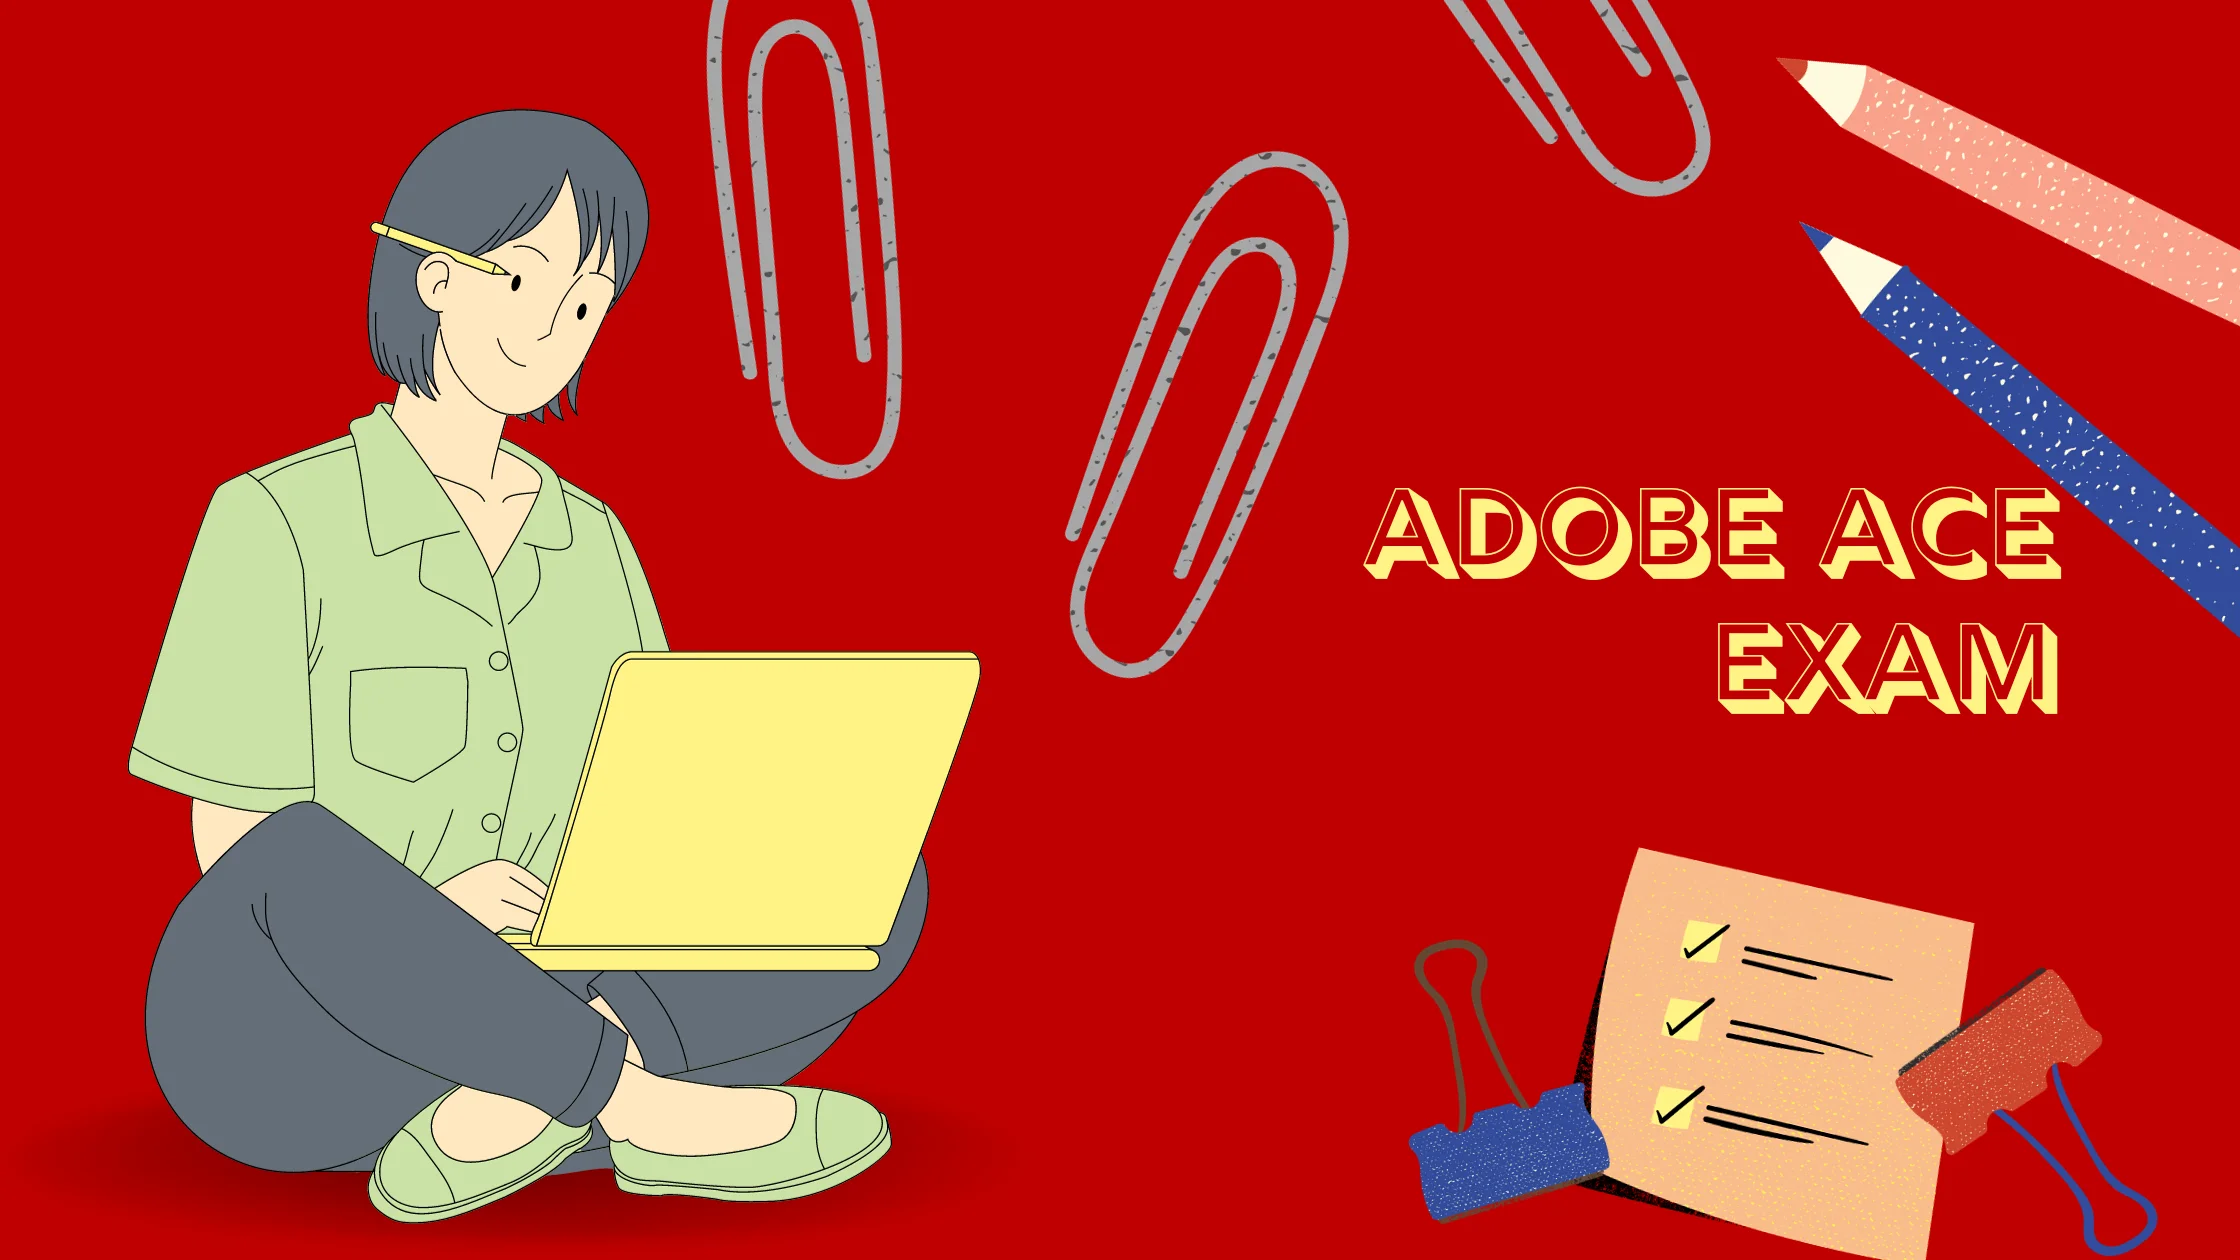 Adobe ACE Exam success